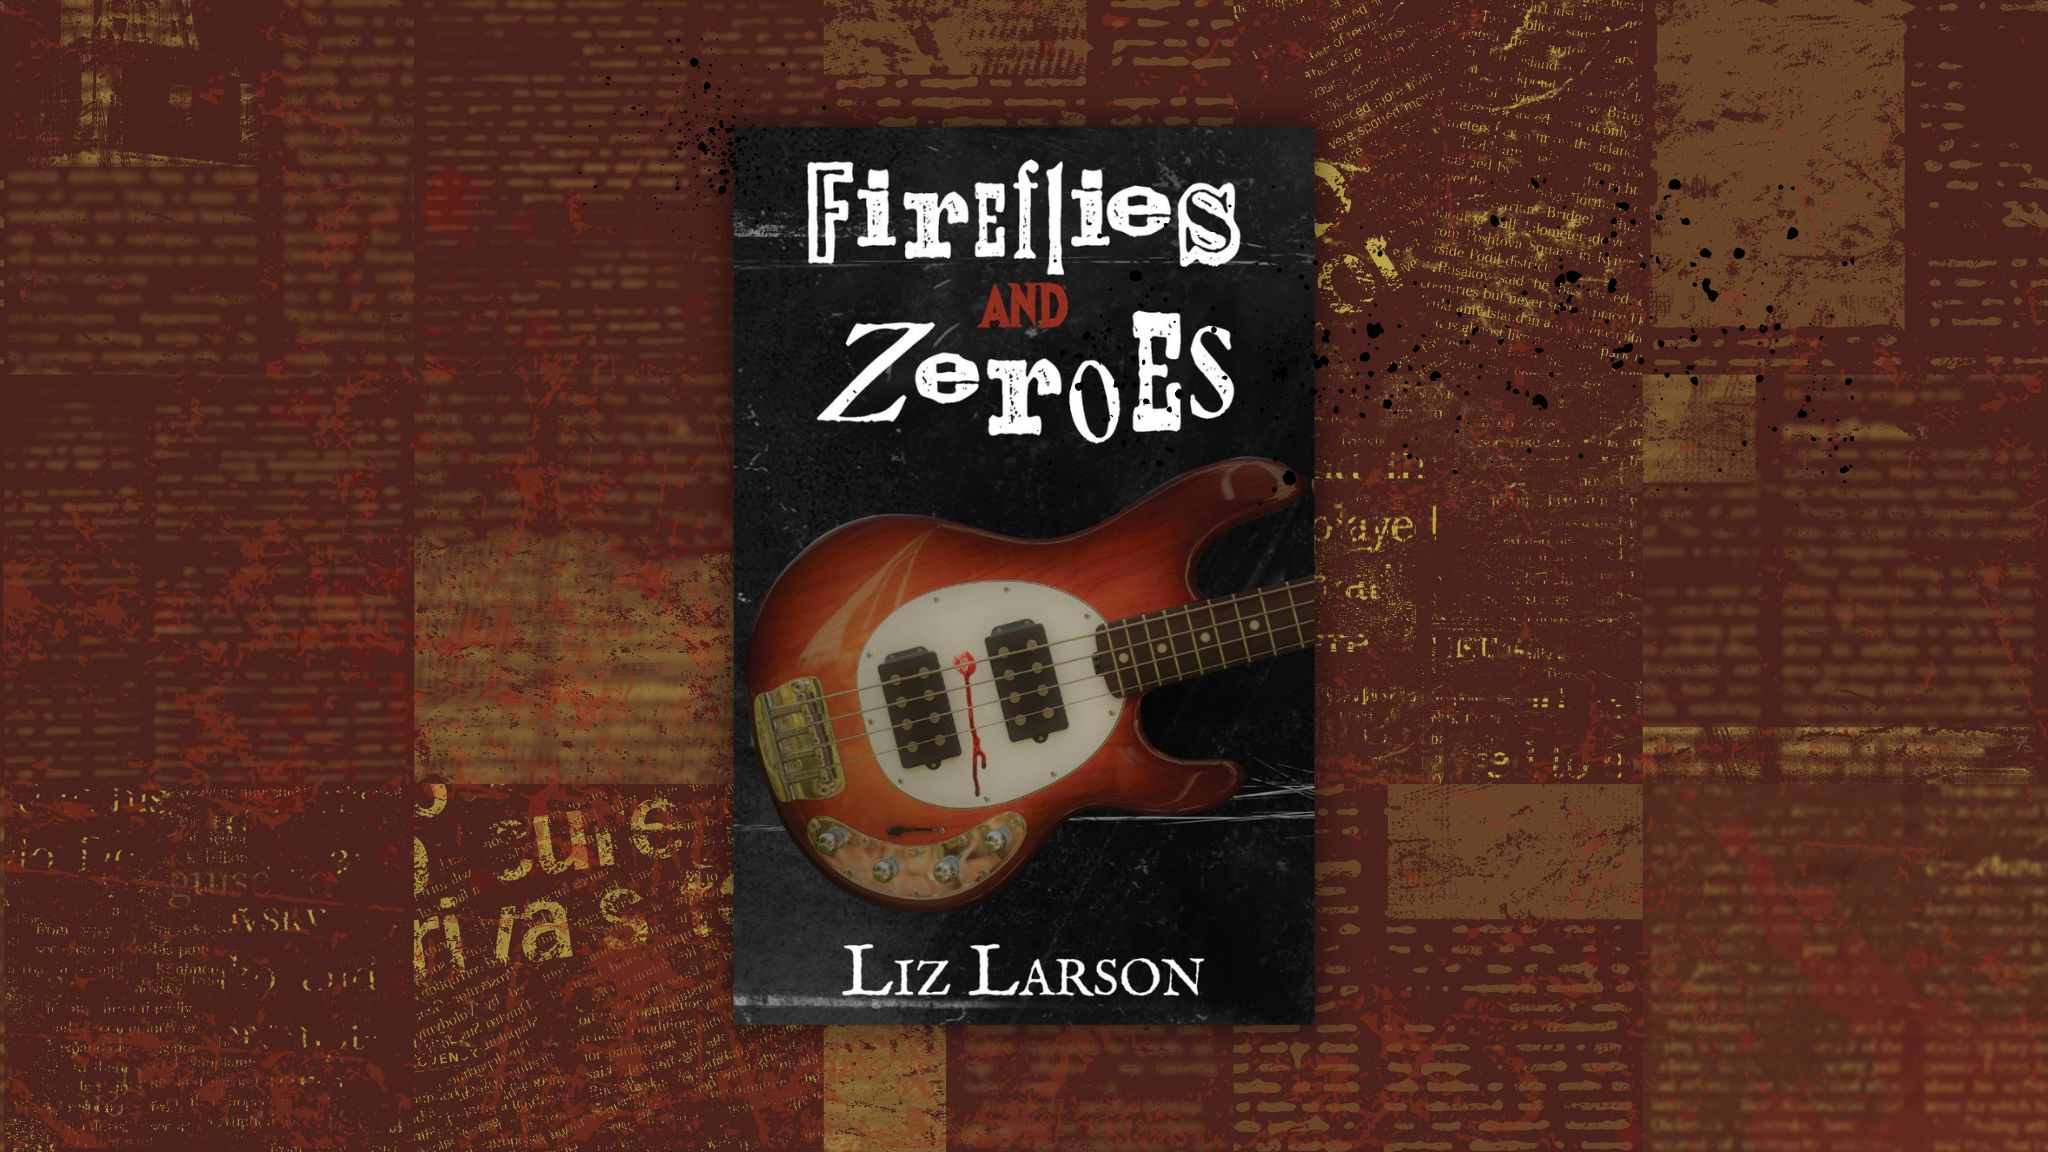 Fireflies and Zeroes by Liz Larson